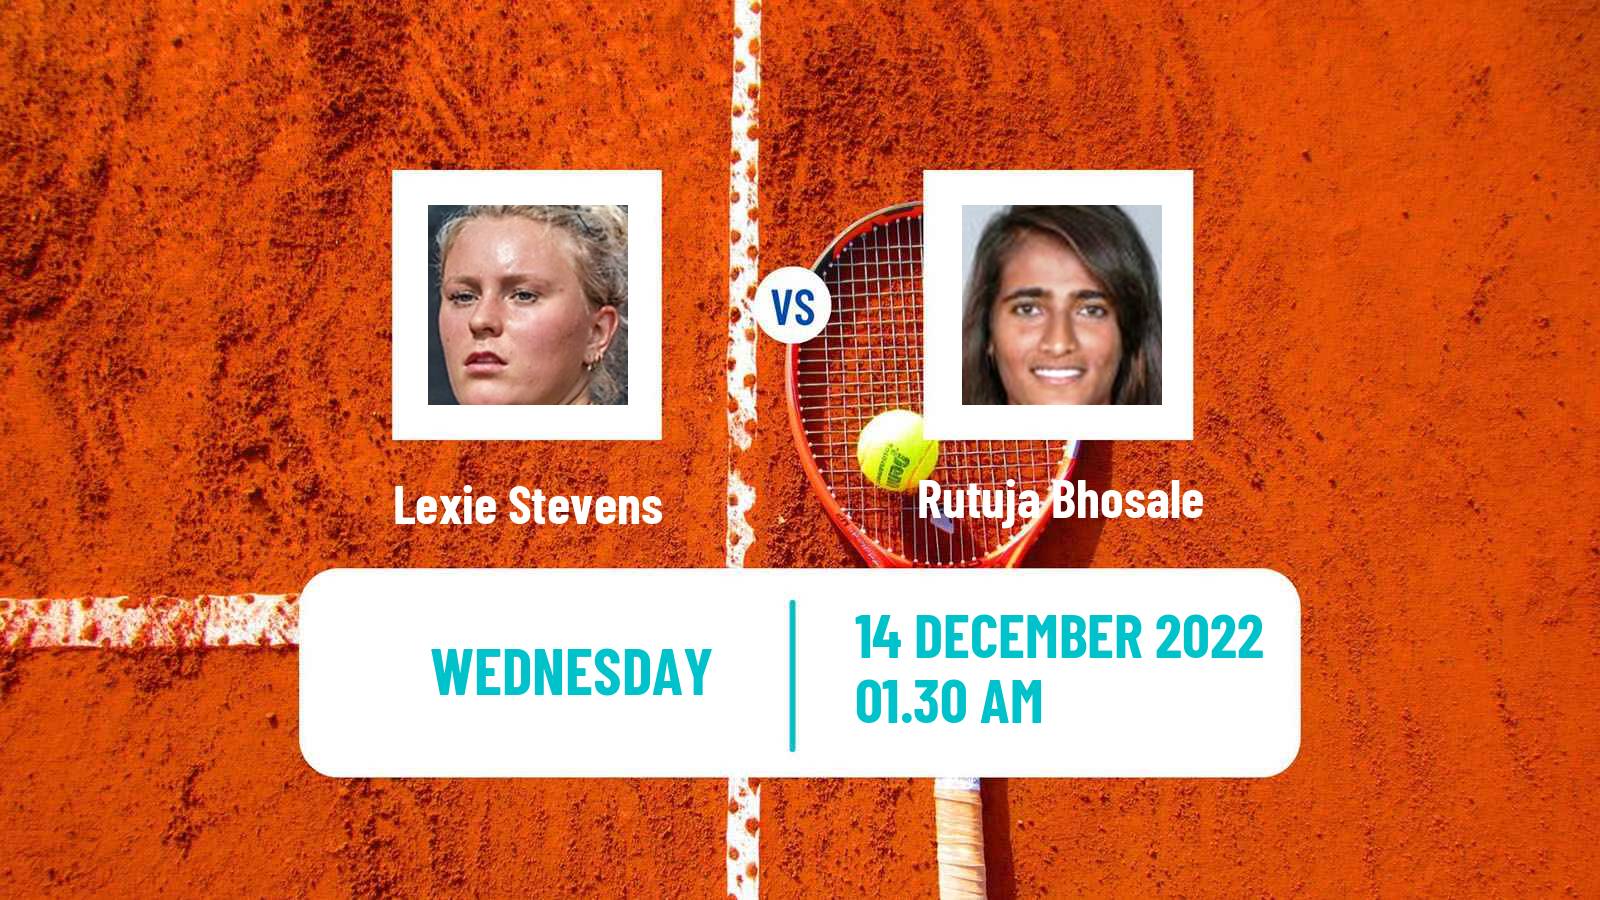 Tennis ITF Tournaments Lexie Stevens - Rutuja Bhosale